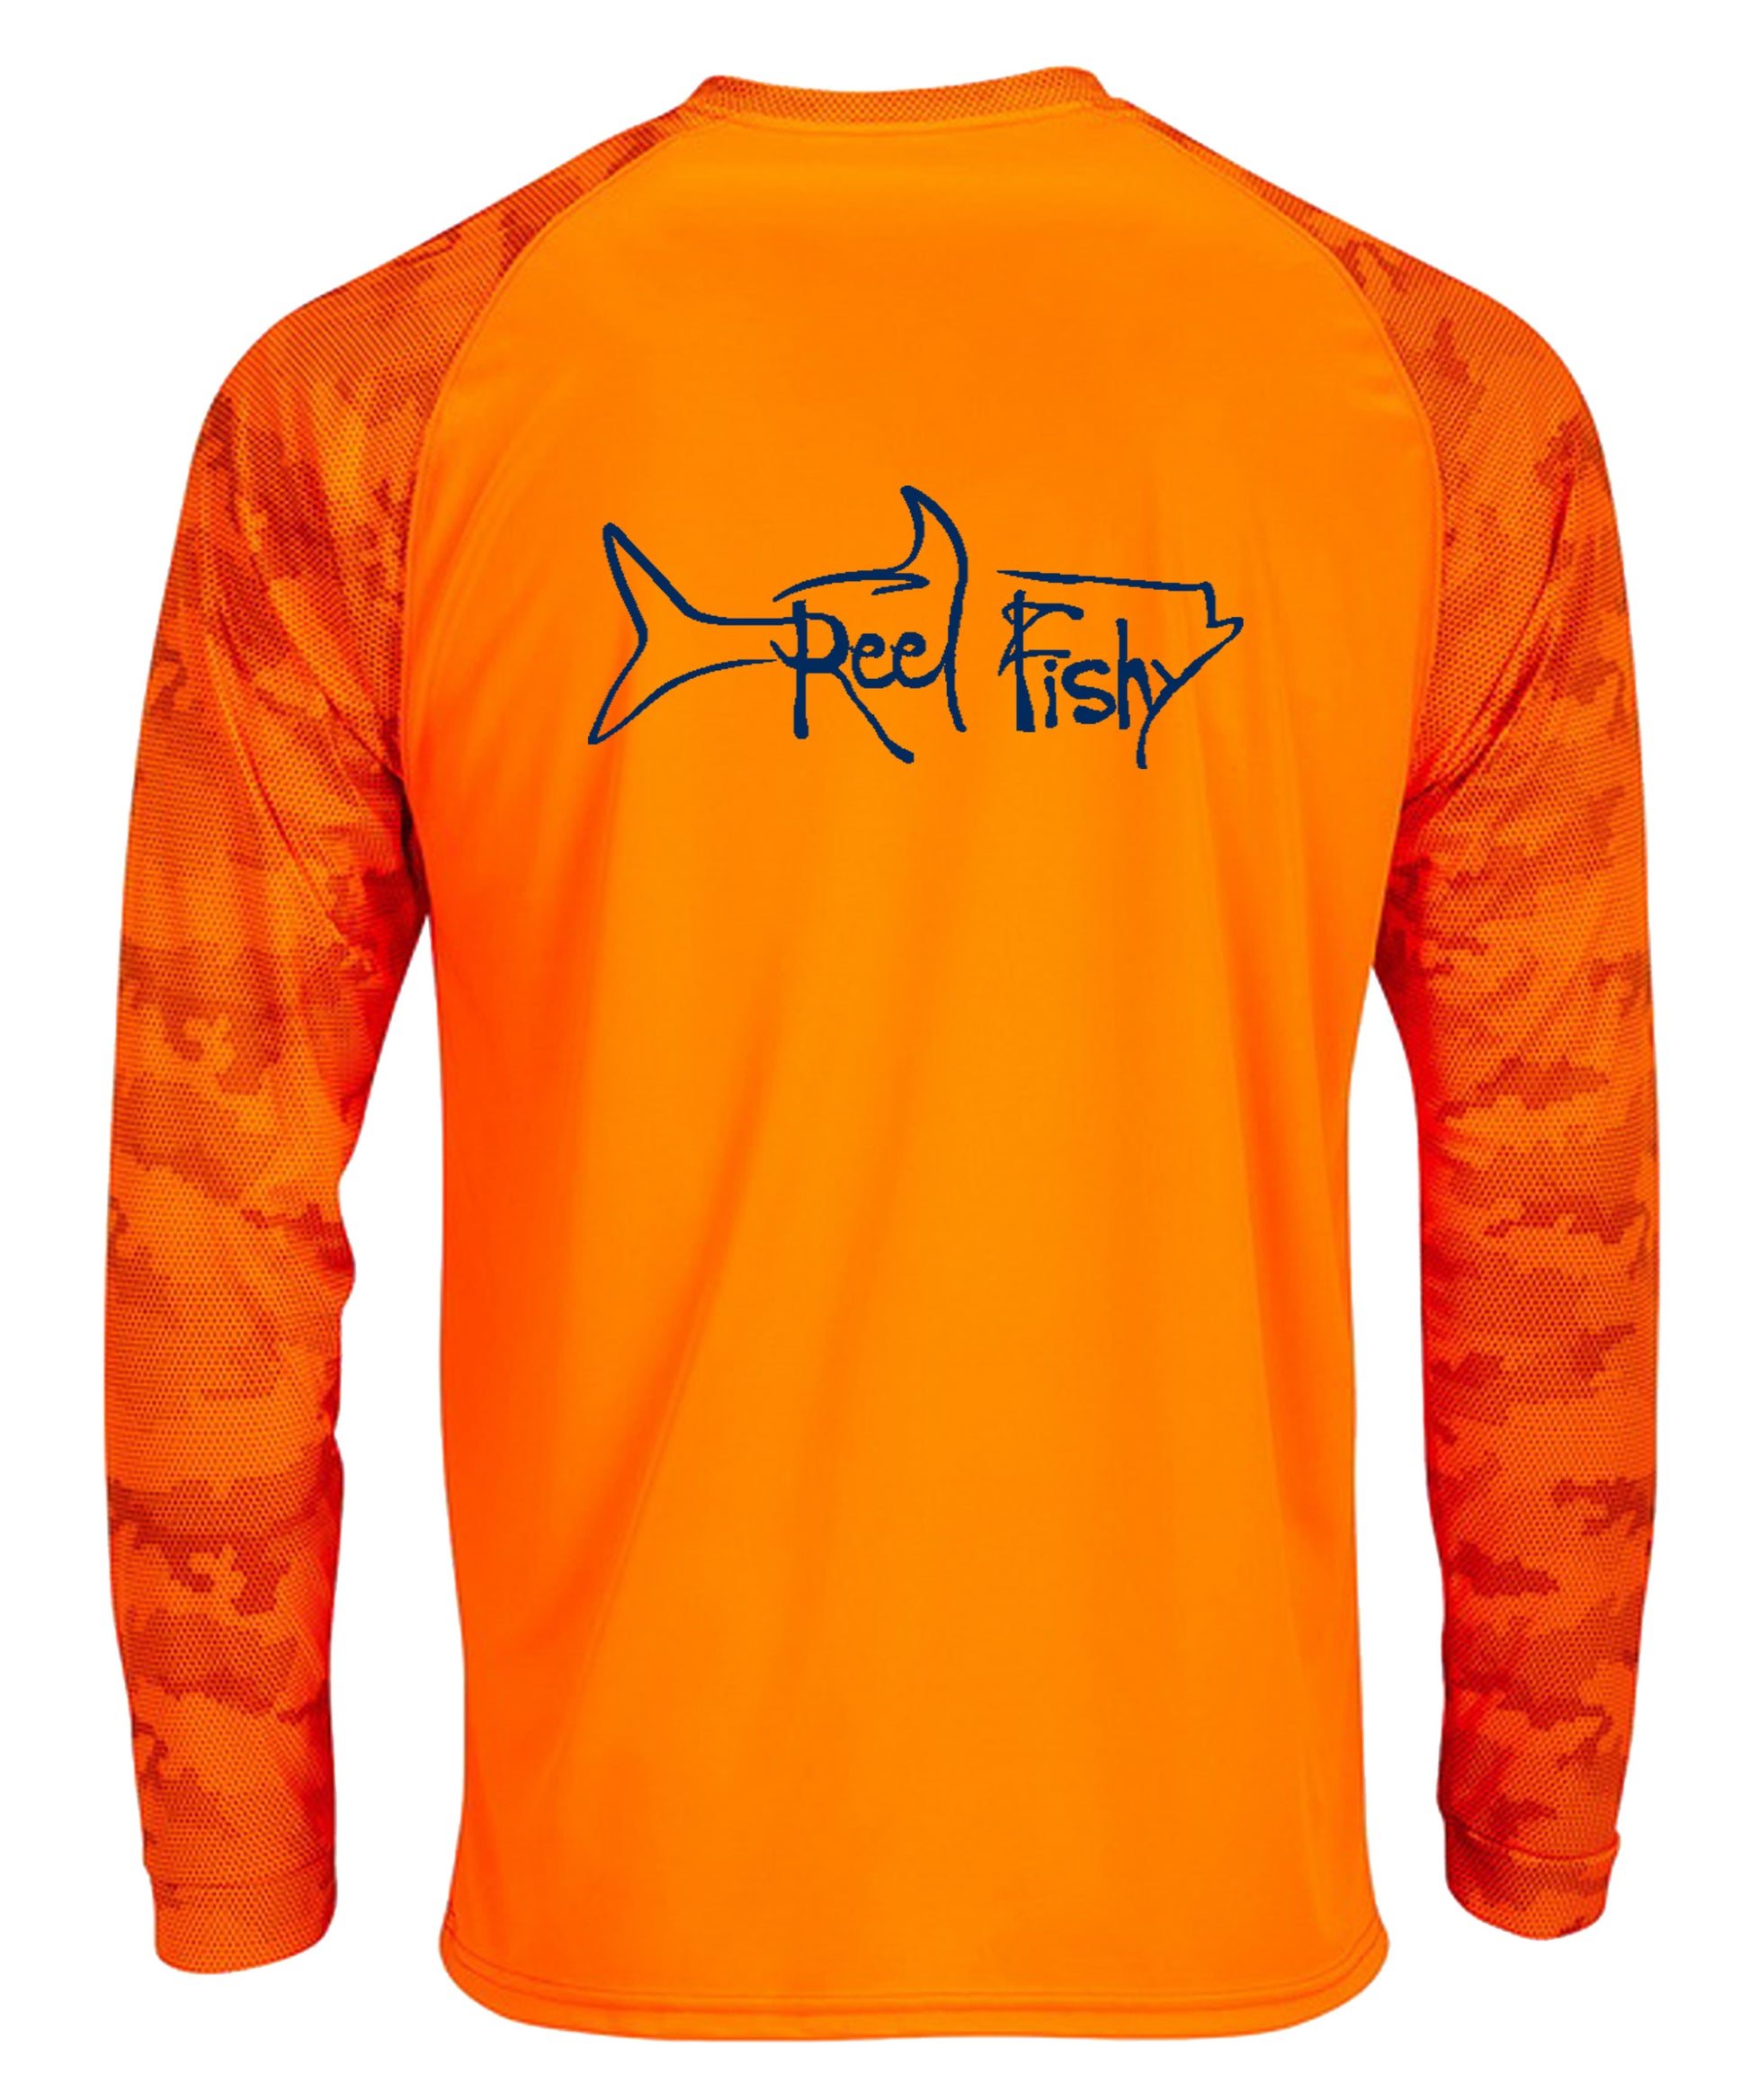 Tarpon Performance Digital Camo 50+uv Fishing Long Sleeve Shirts- Reel Fishy Apparel M / Neon Orange Camo - unisex